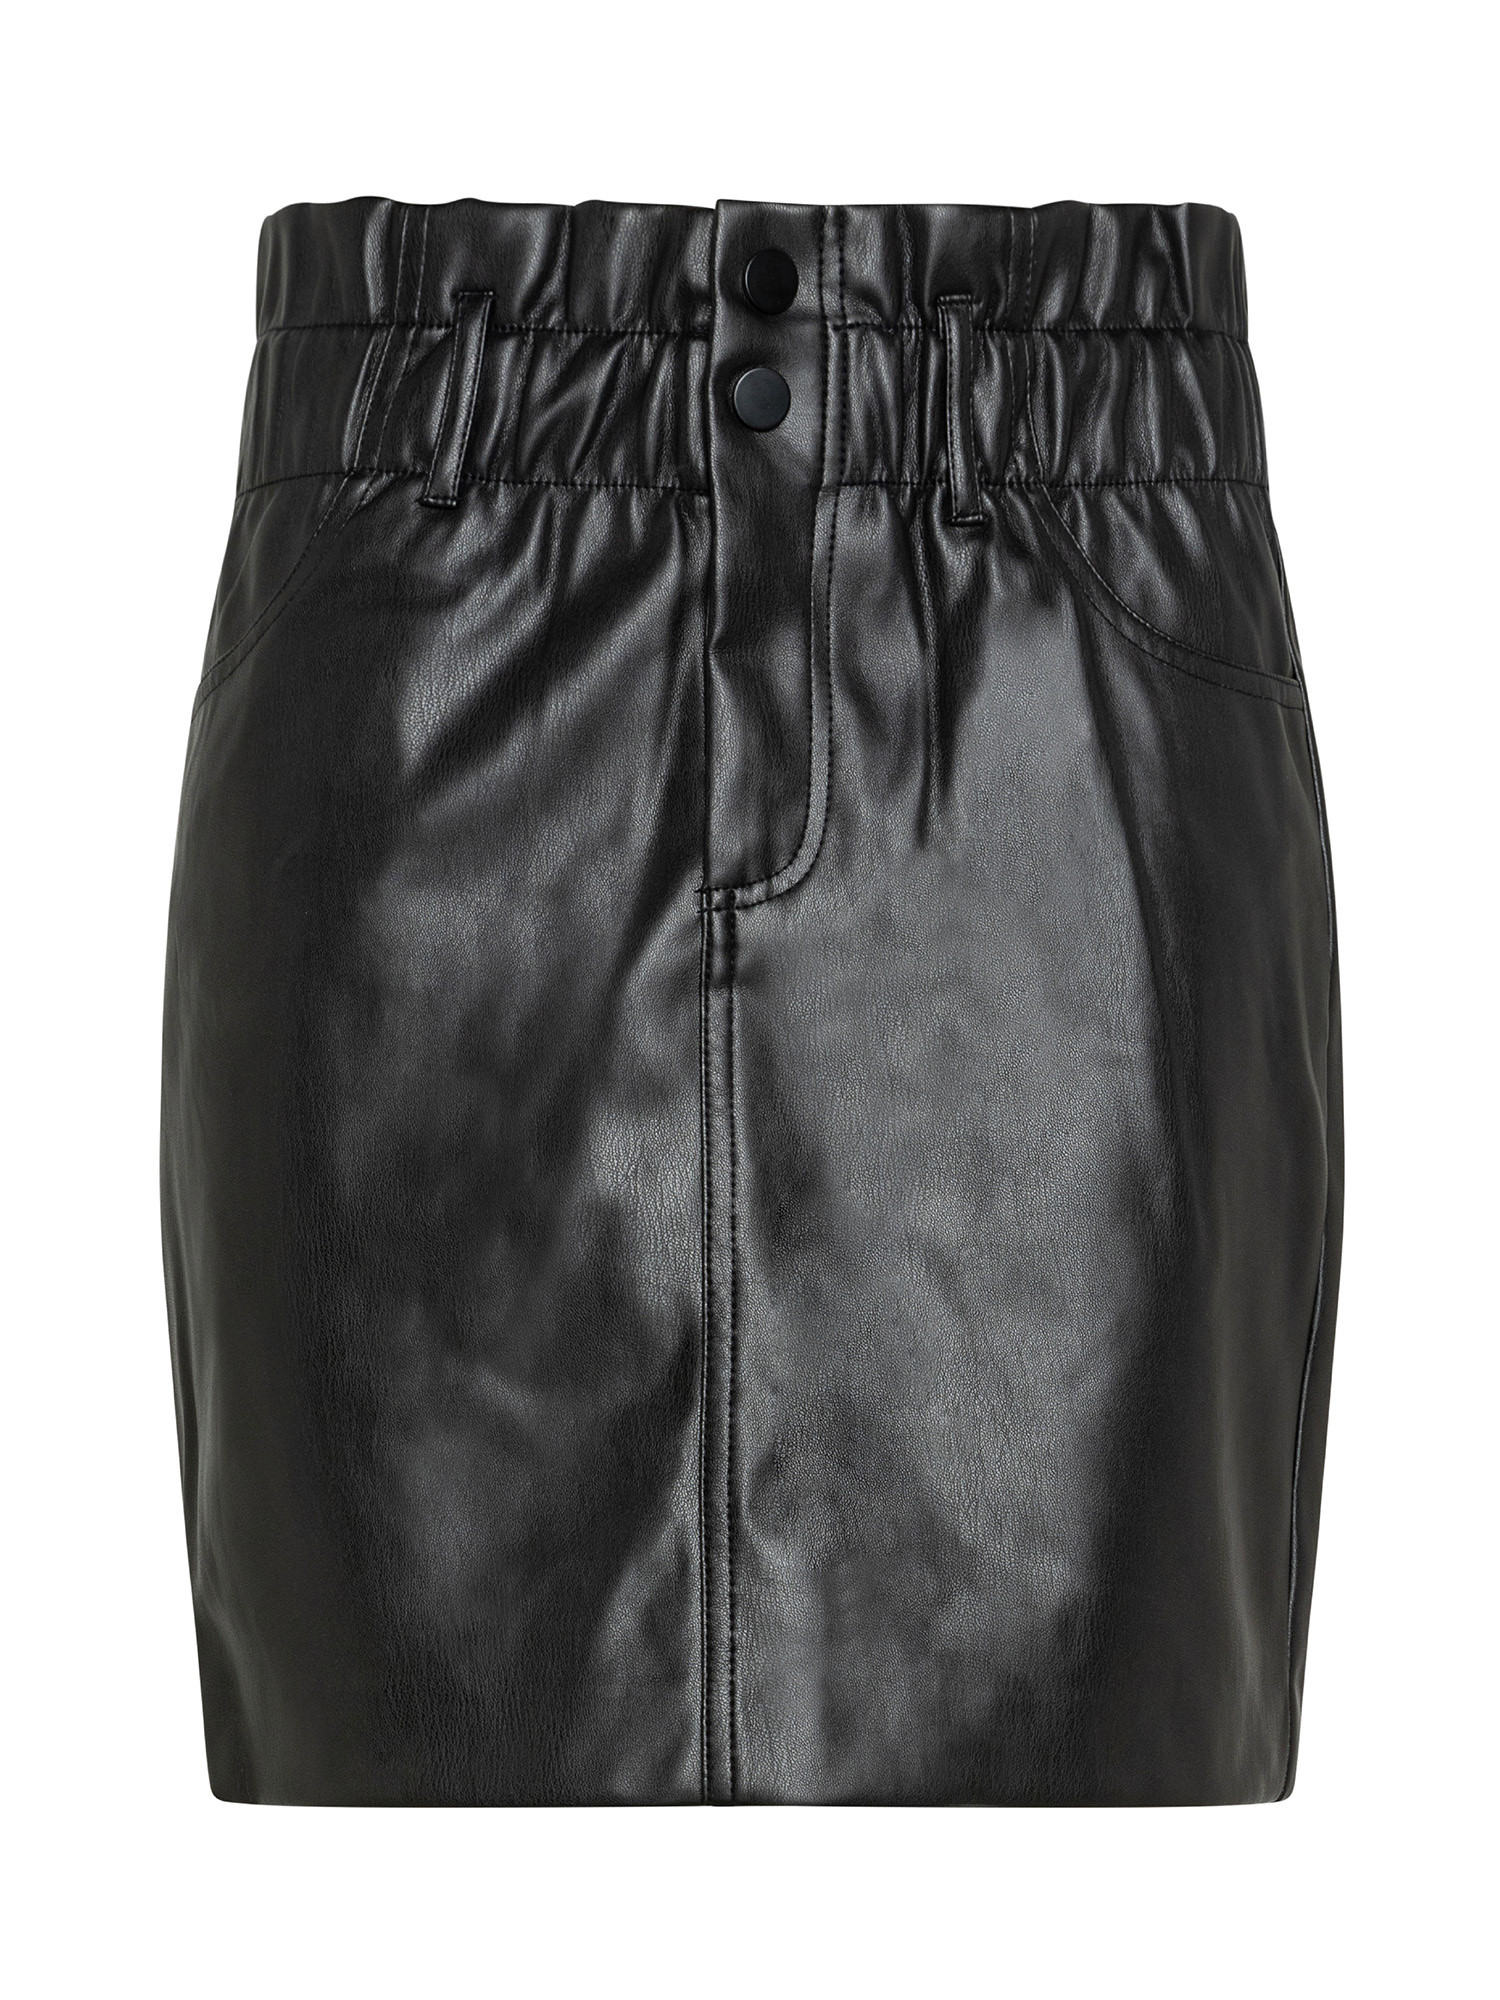 faux leather skirt, Black, large image number 0